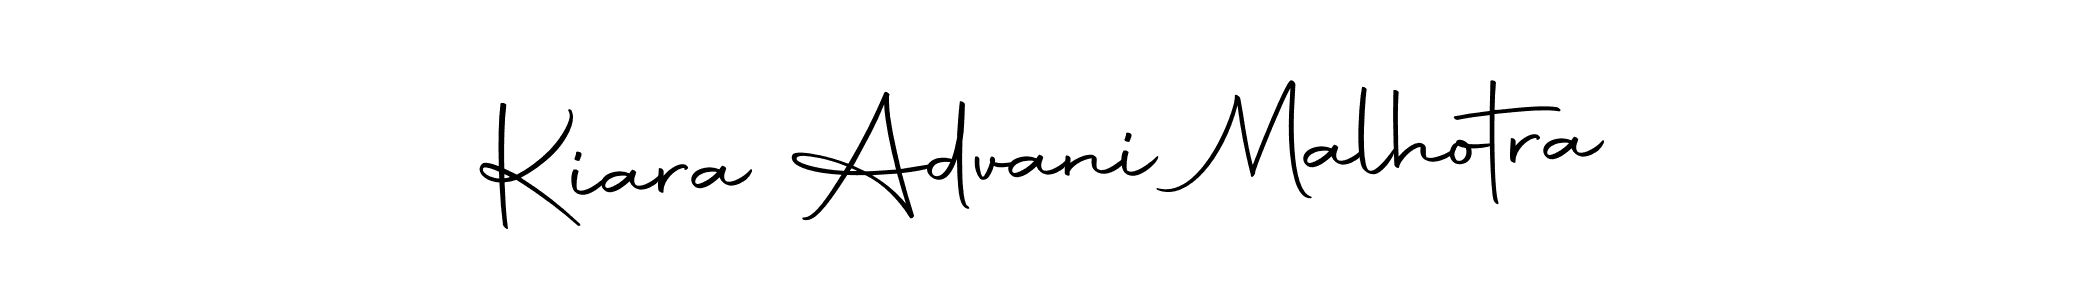 Make a beautiful signature design for name Kiara Advani Malhotra. Use this online signature maker to create a handwritten signature for free. Kiara Advani Malhotra signature style 10 images and pictures png